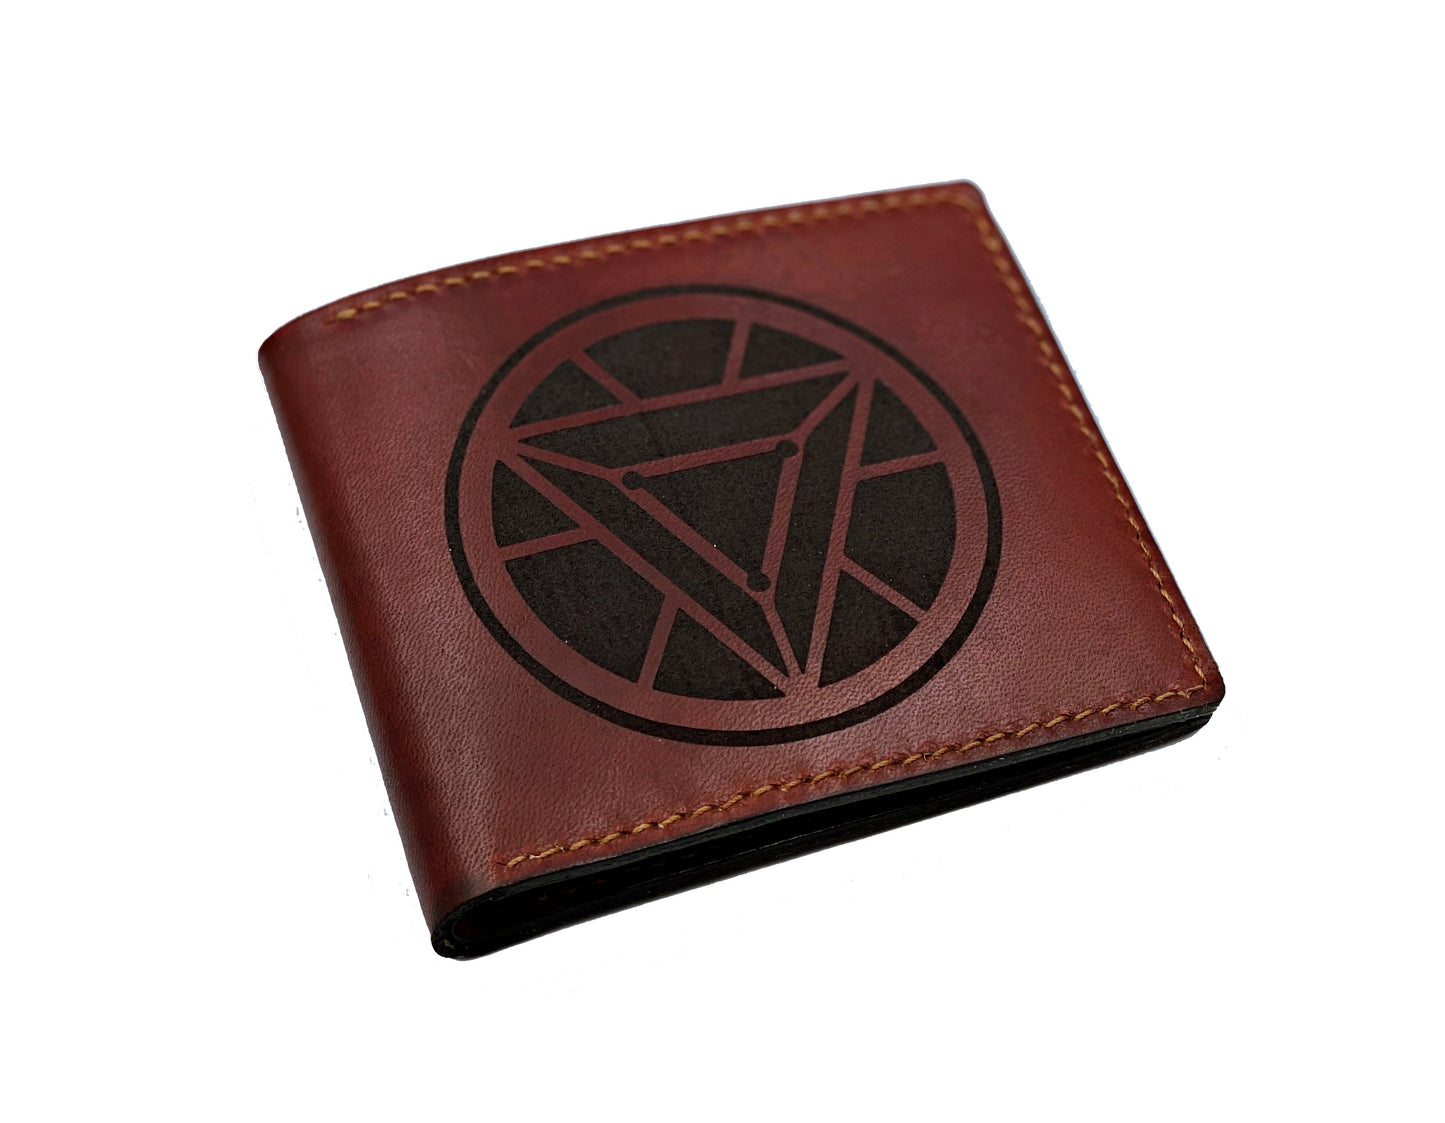 Mayan Corner - Superheroes leather handmade wallet, customized men's wallet, Leather gift ideas for men - Spiderman logo wallet